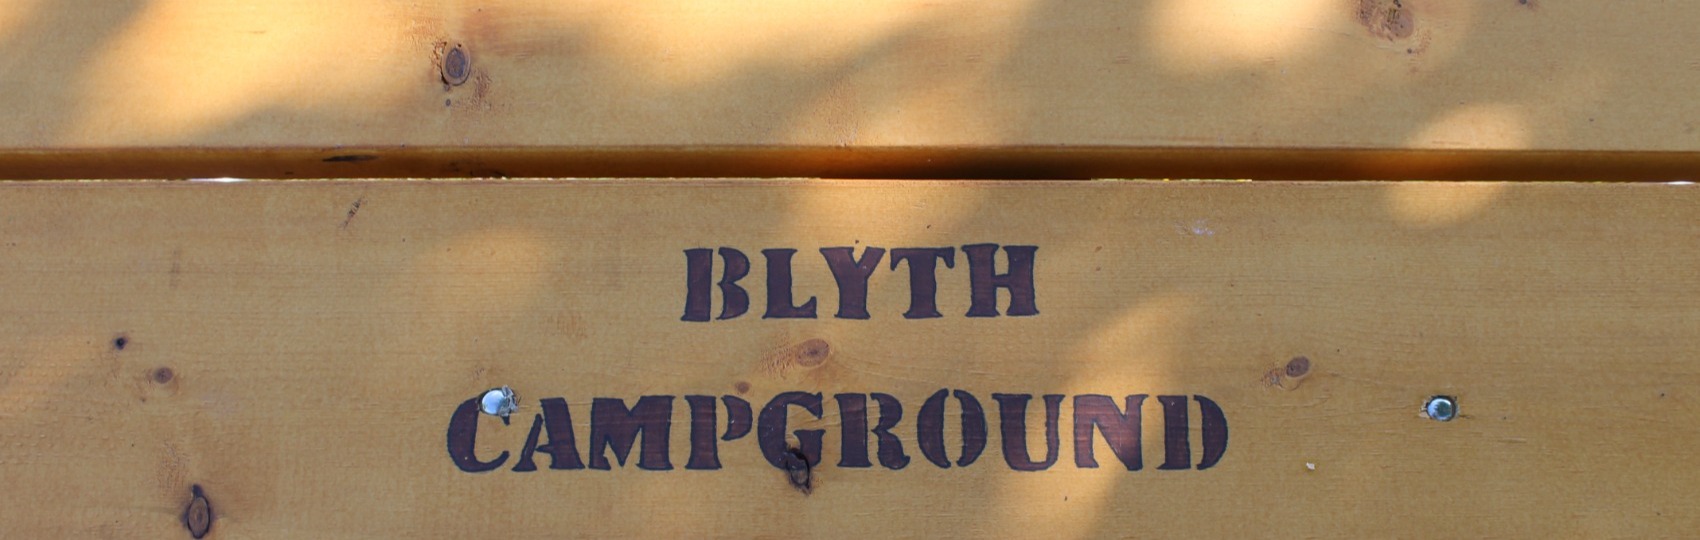 Blyth Campground